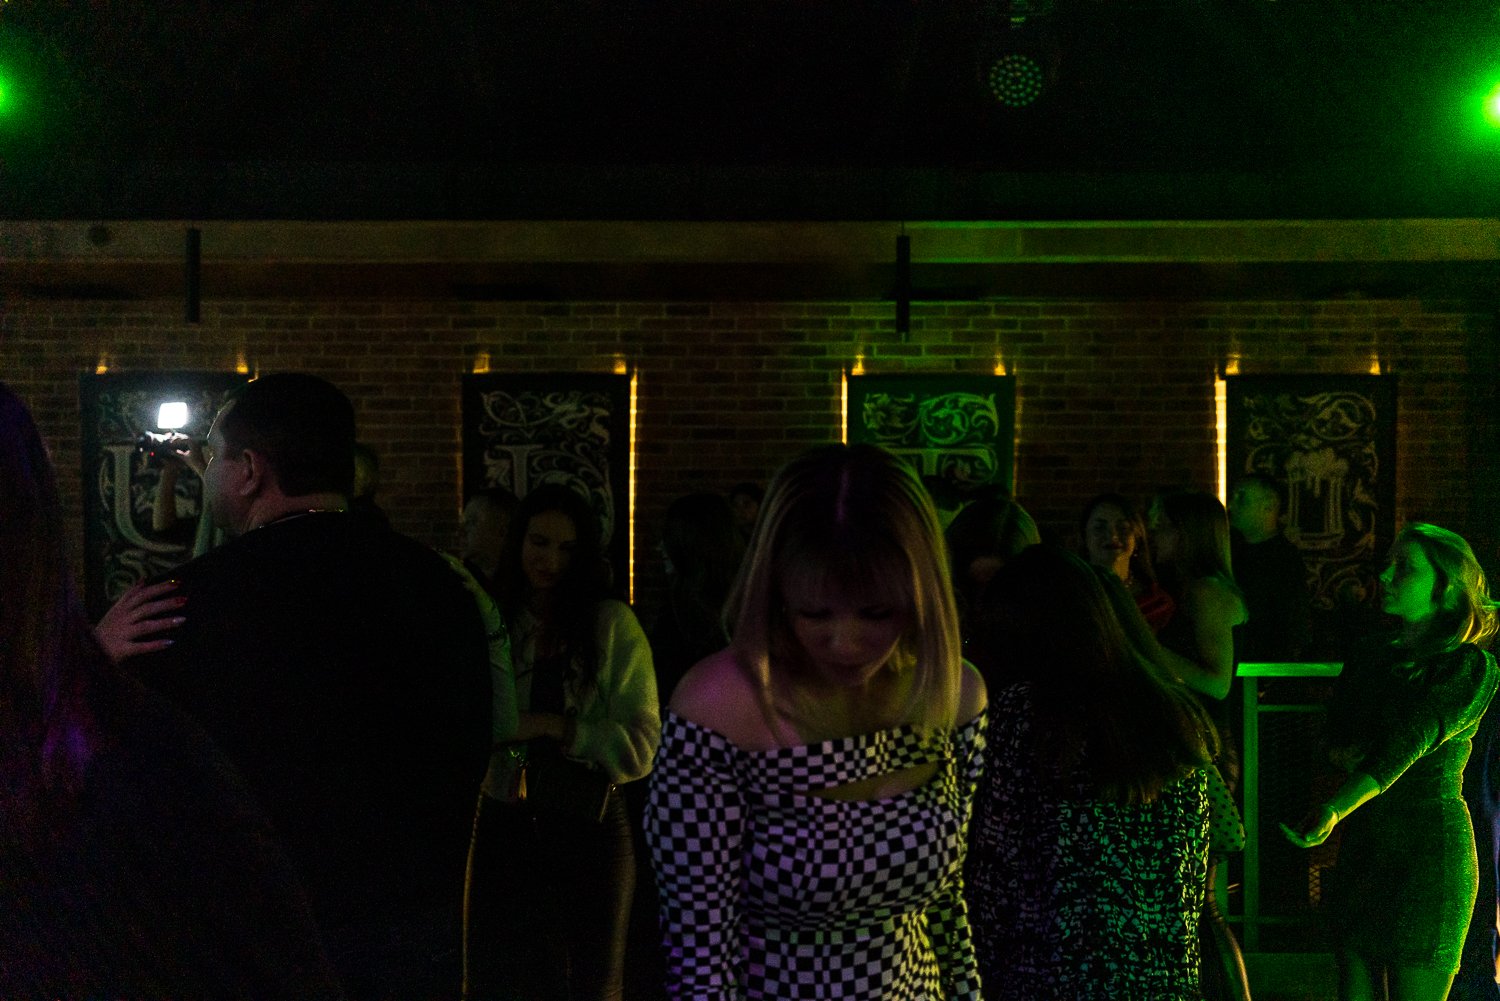  People dance at Cult nightclub on Saturday, February 5, 2022 in Mariupol, Ukraine. 